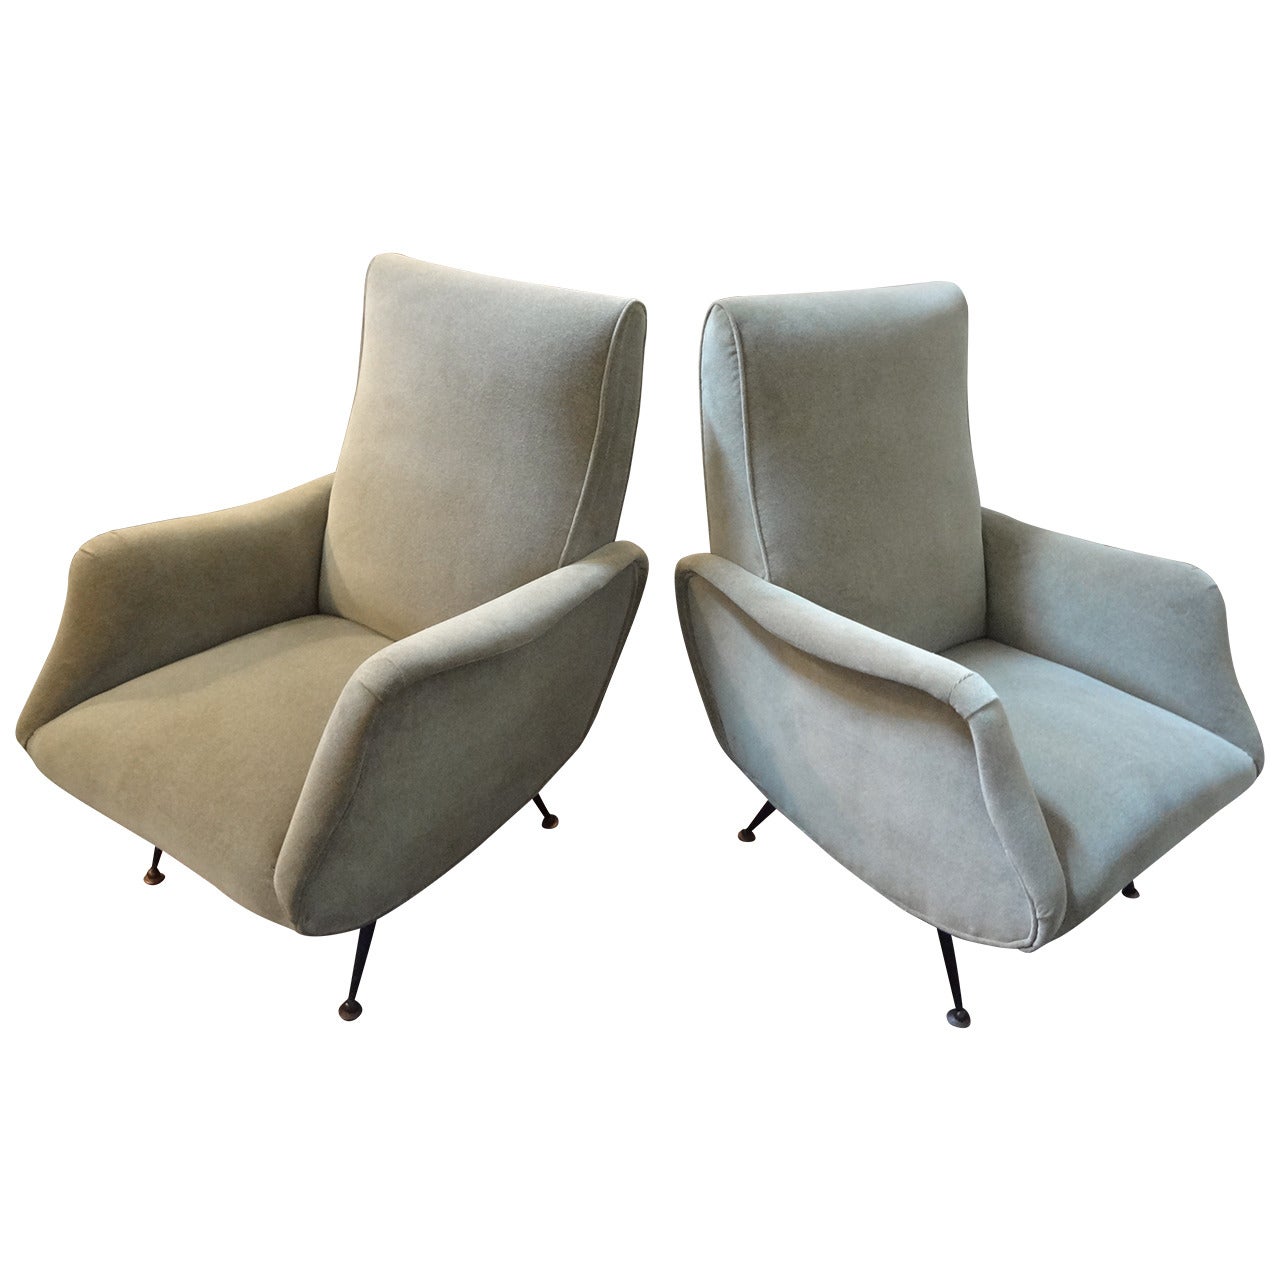 Pair of Sculptural Lounge Chairs, Milan, 1950